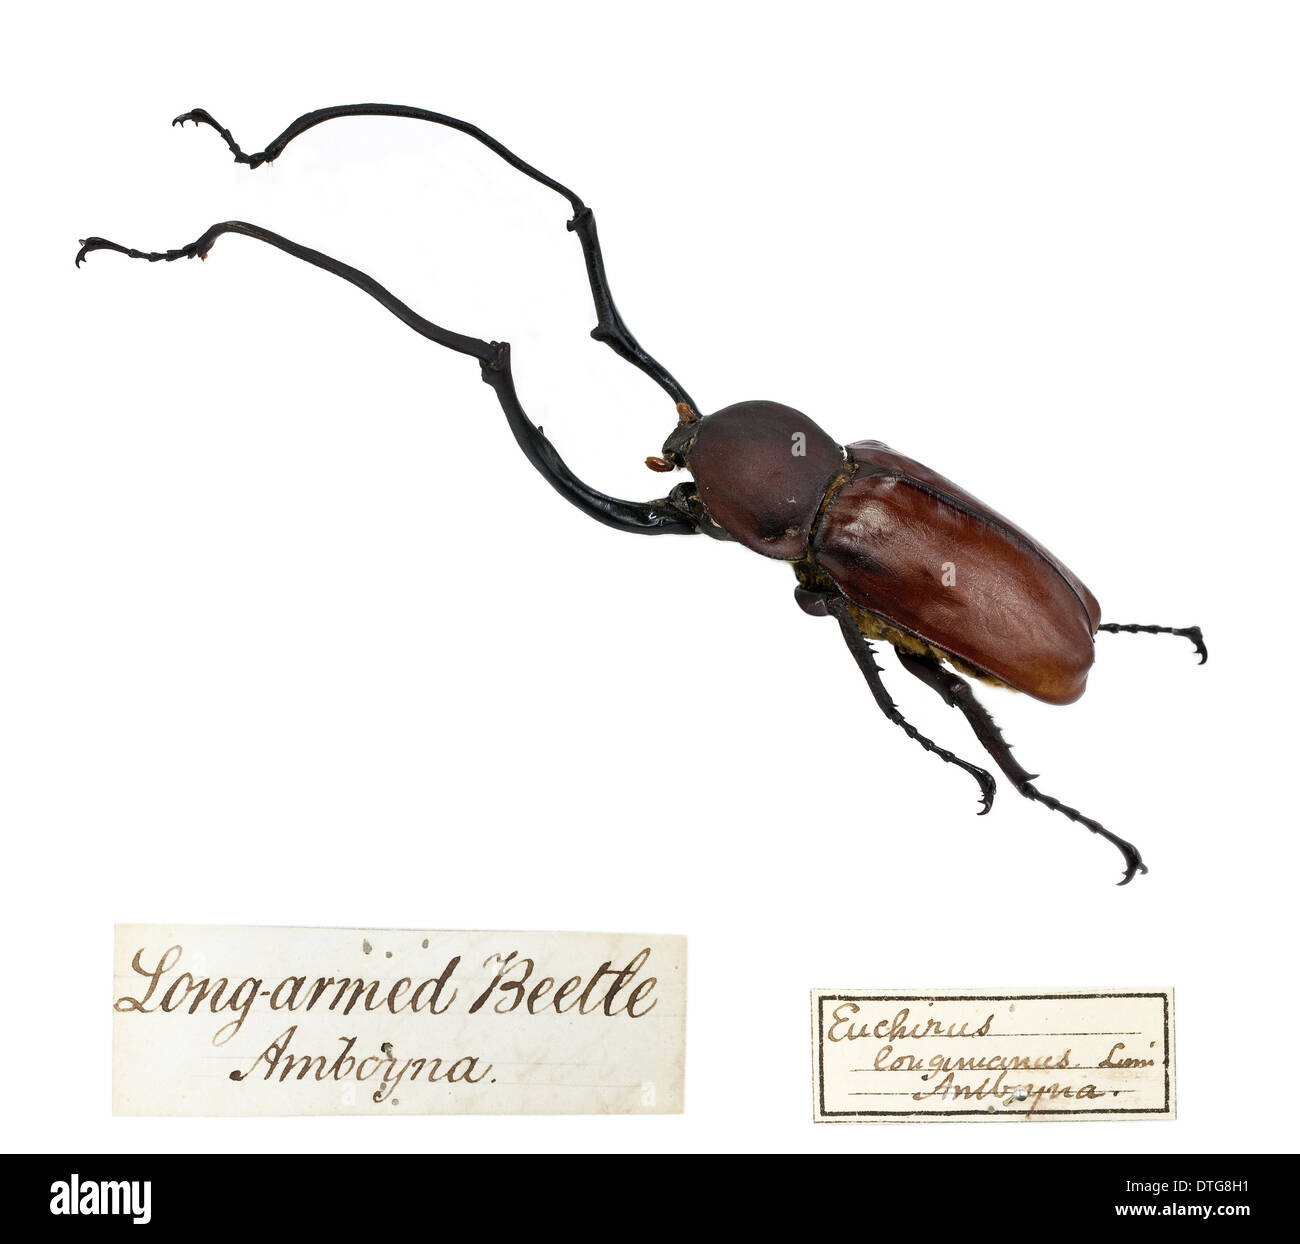 Euchirus longimanus, Wallace's Long armed beetle Stock Photo